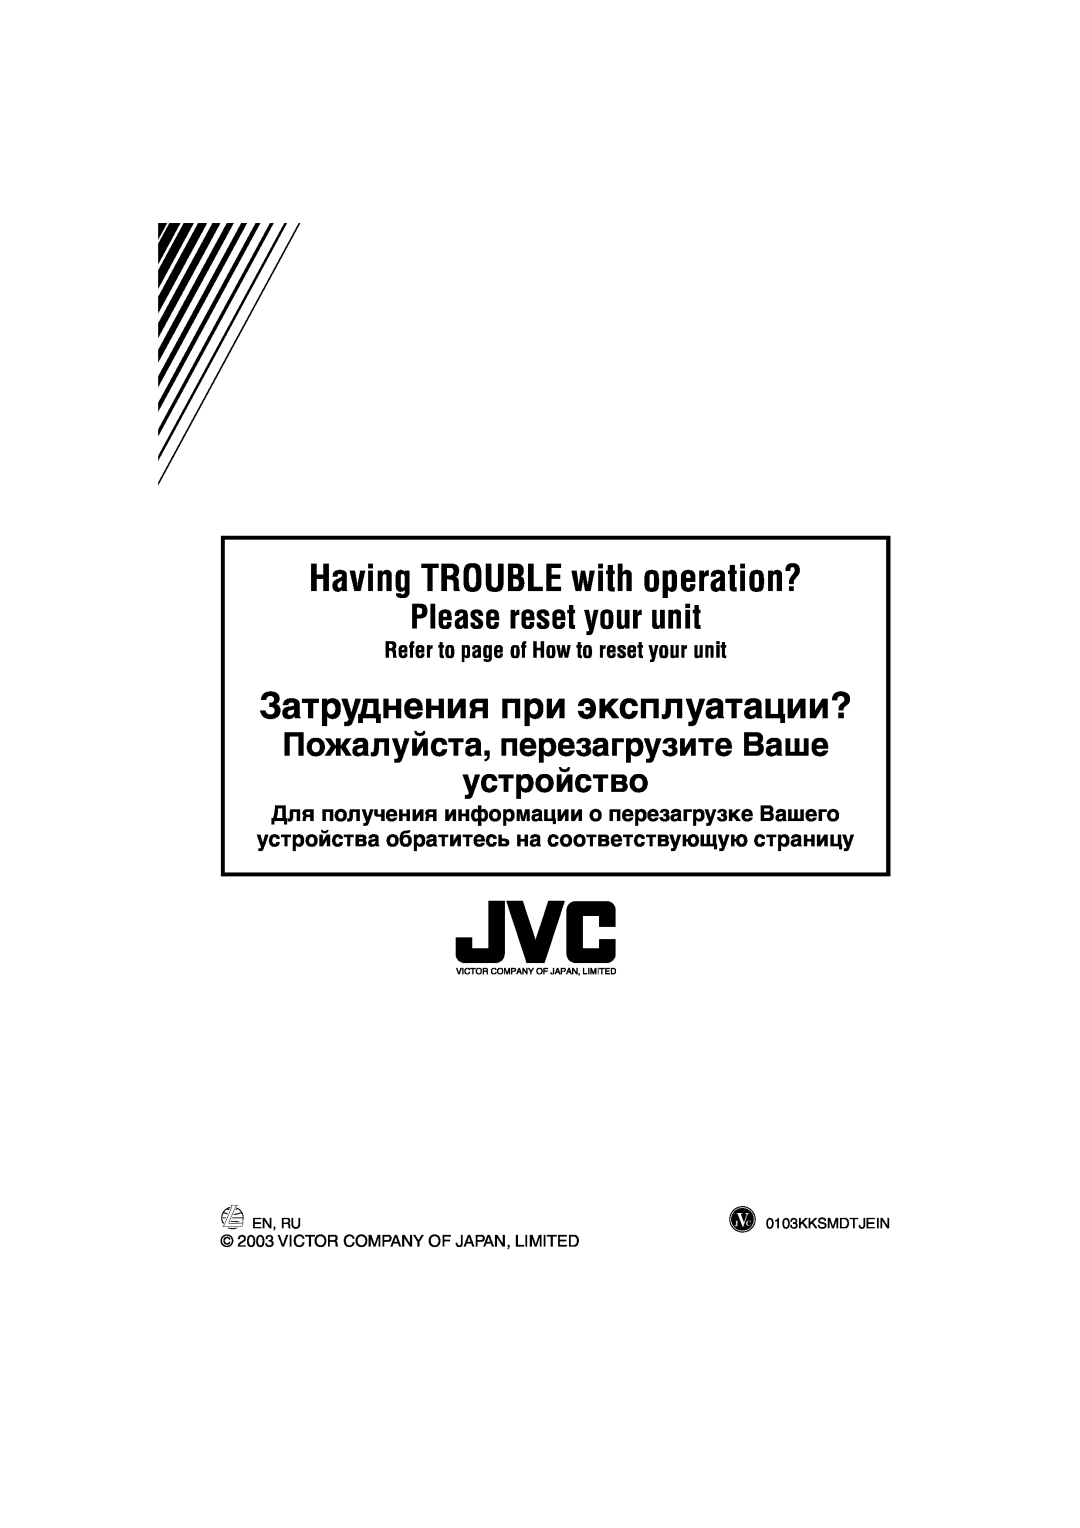 JVC GET0126-001A manual Having TROUBLE with operation?, Please reset your unit, Пожалуйста, перезагрузите Ваше устройство 